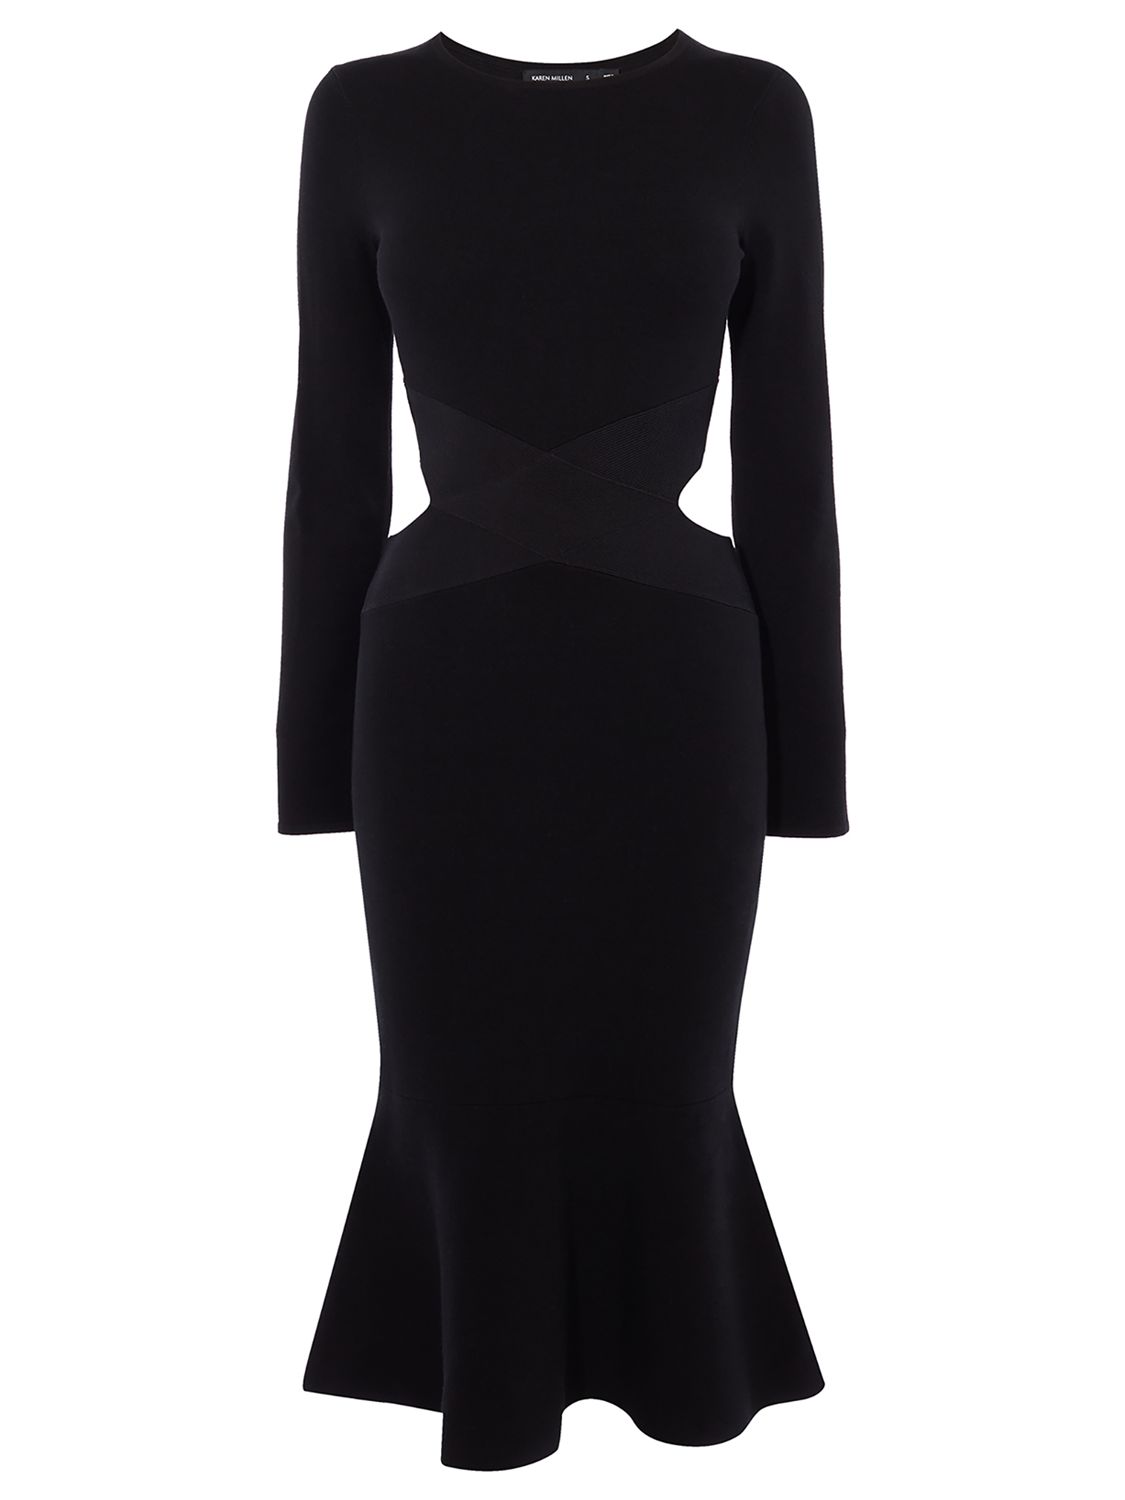 Karen Millen Cut Out Flare Hem Dress, Black at John Lewis & Partners